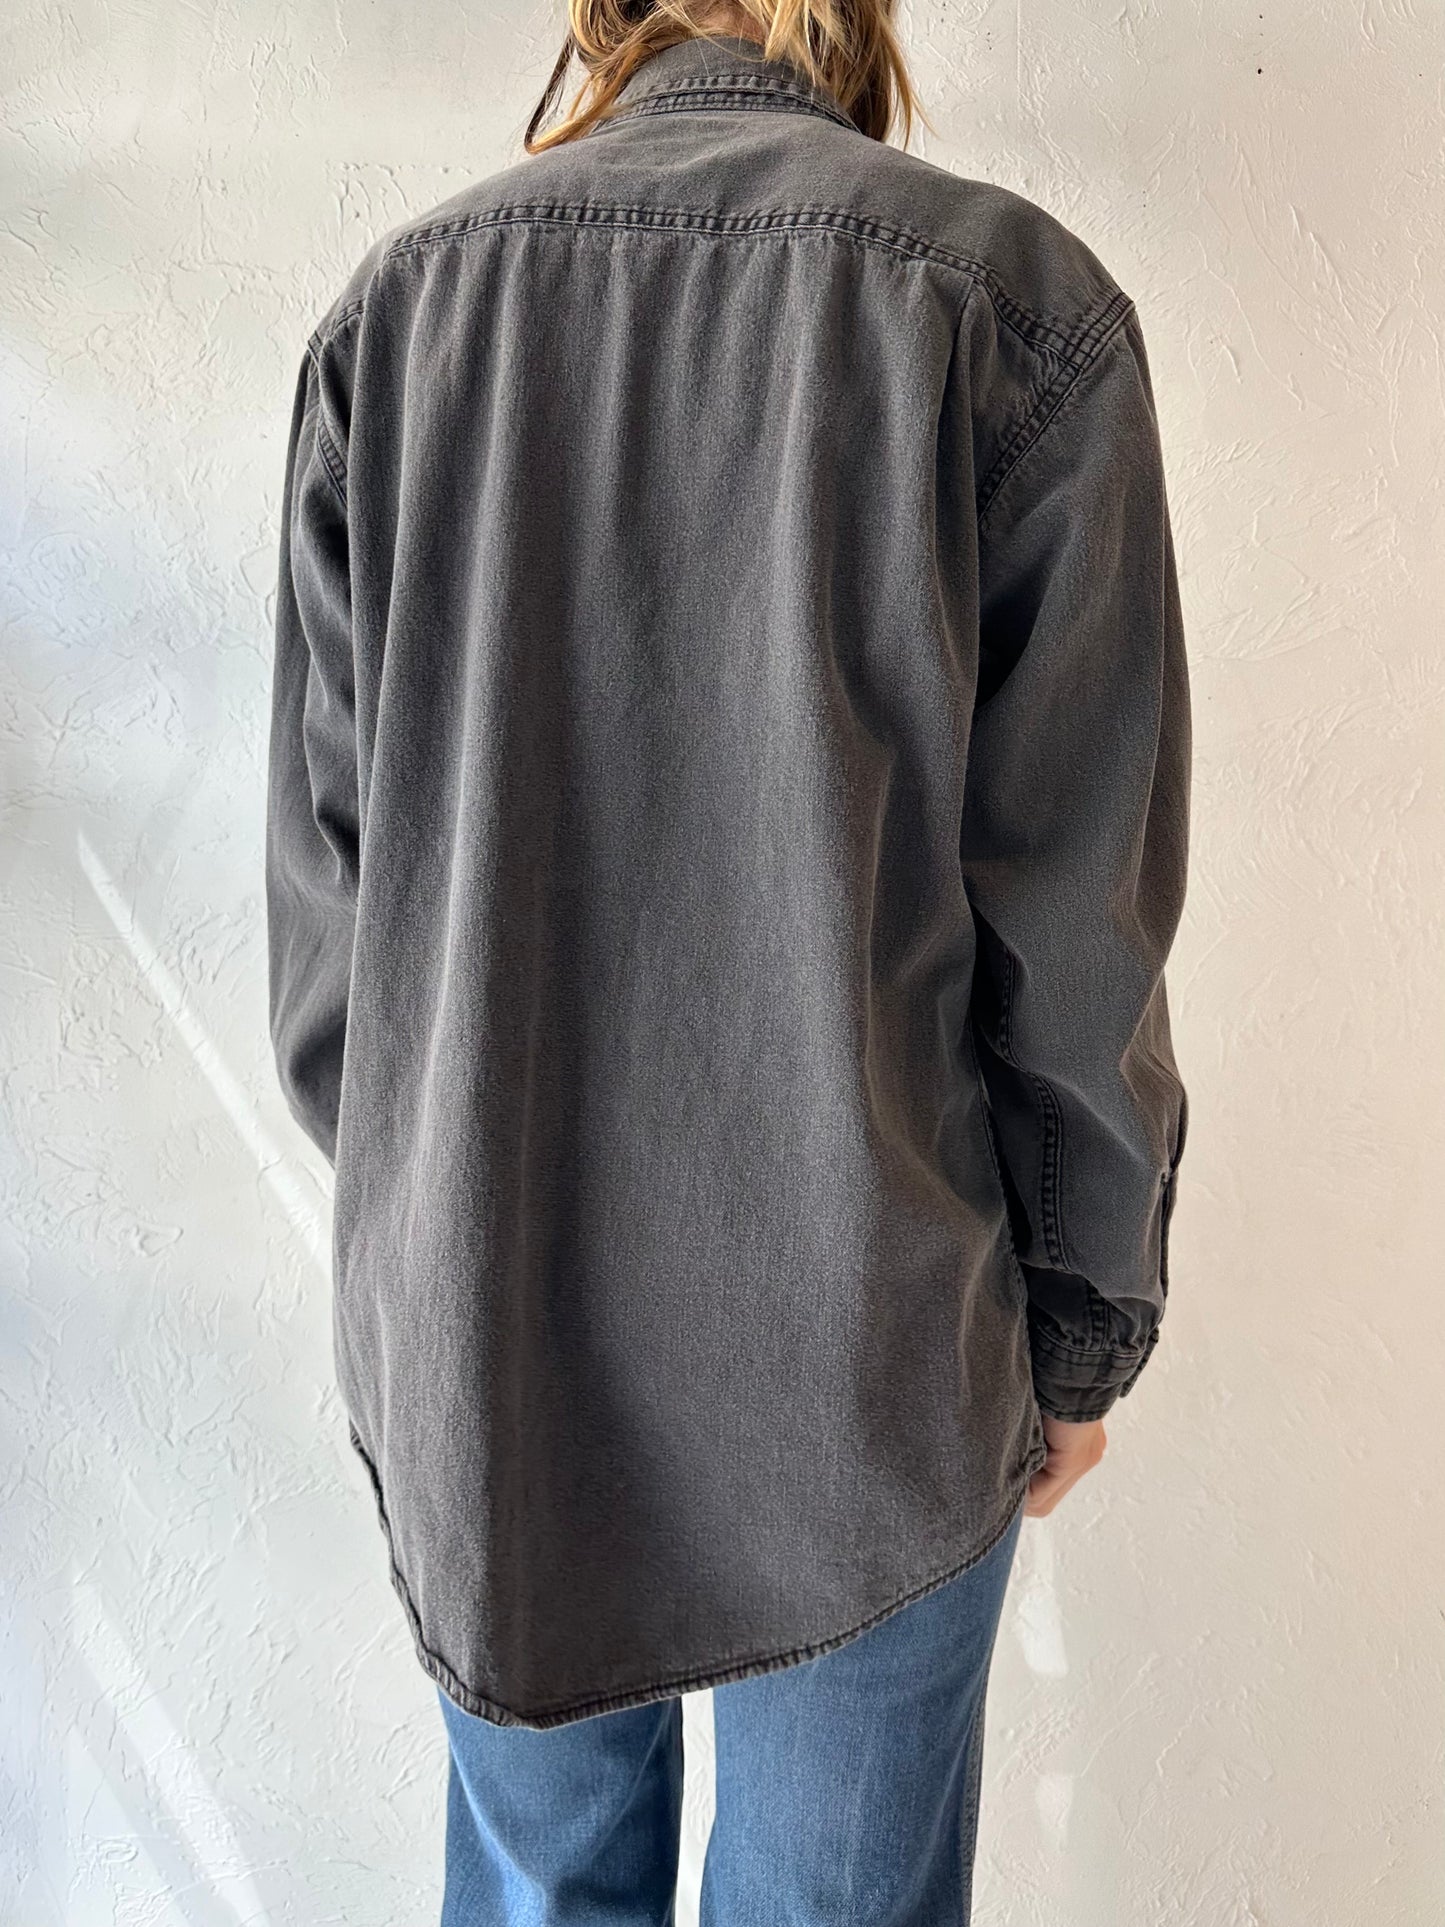 Vintage 'Levis' Gray Denim Button Up Shirt / Medium